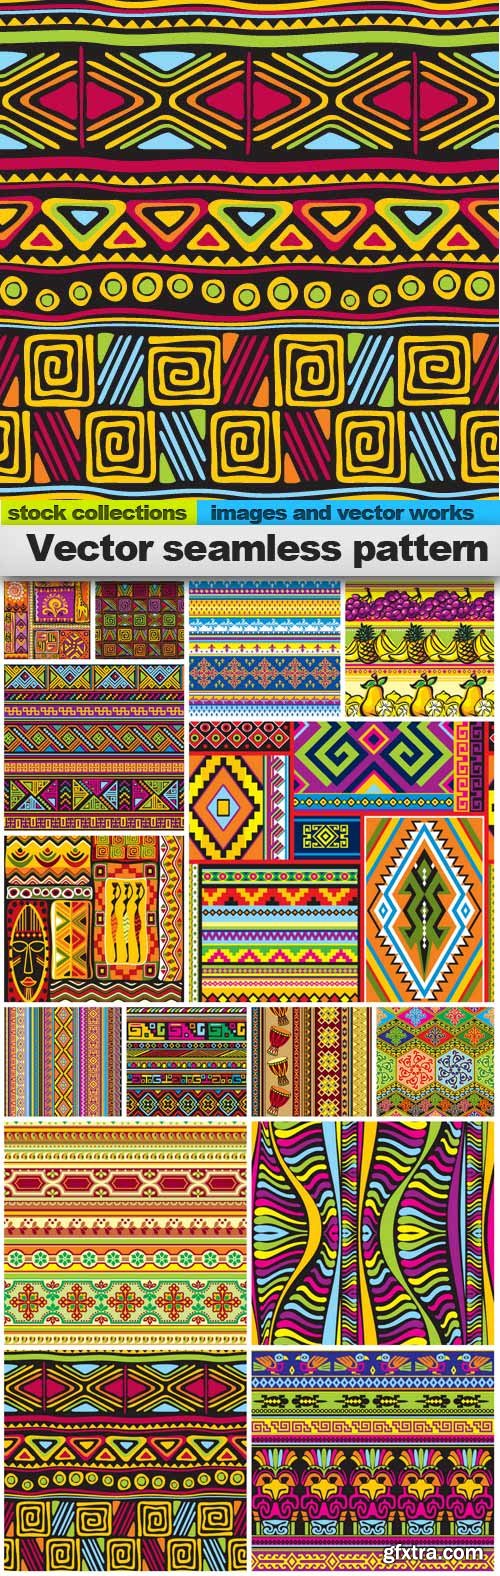 Vector seamless pattern, 15 x EPS